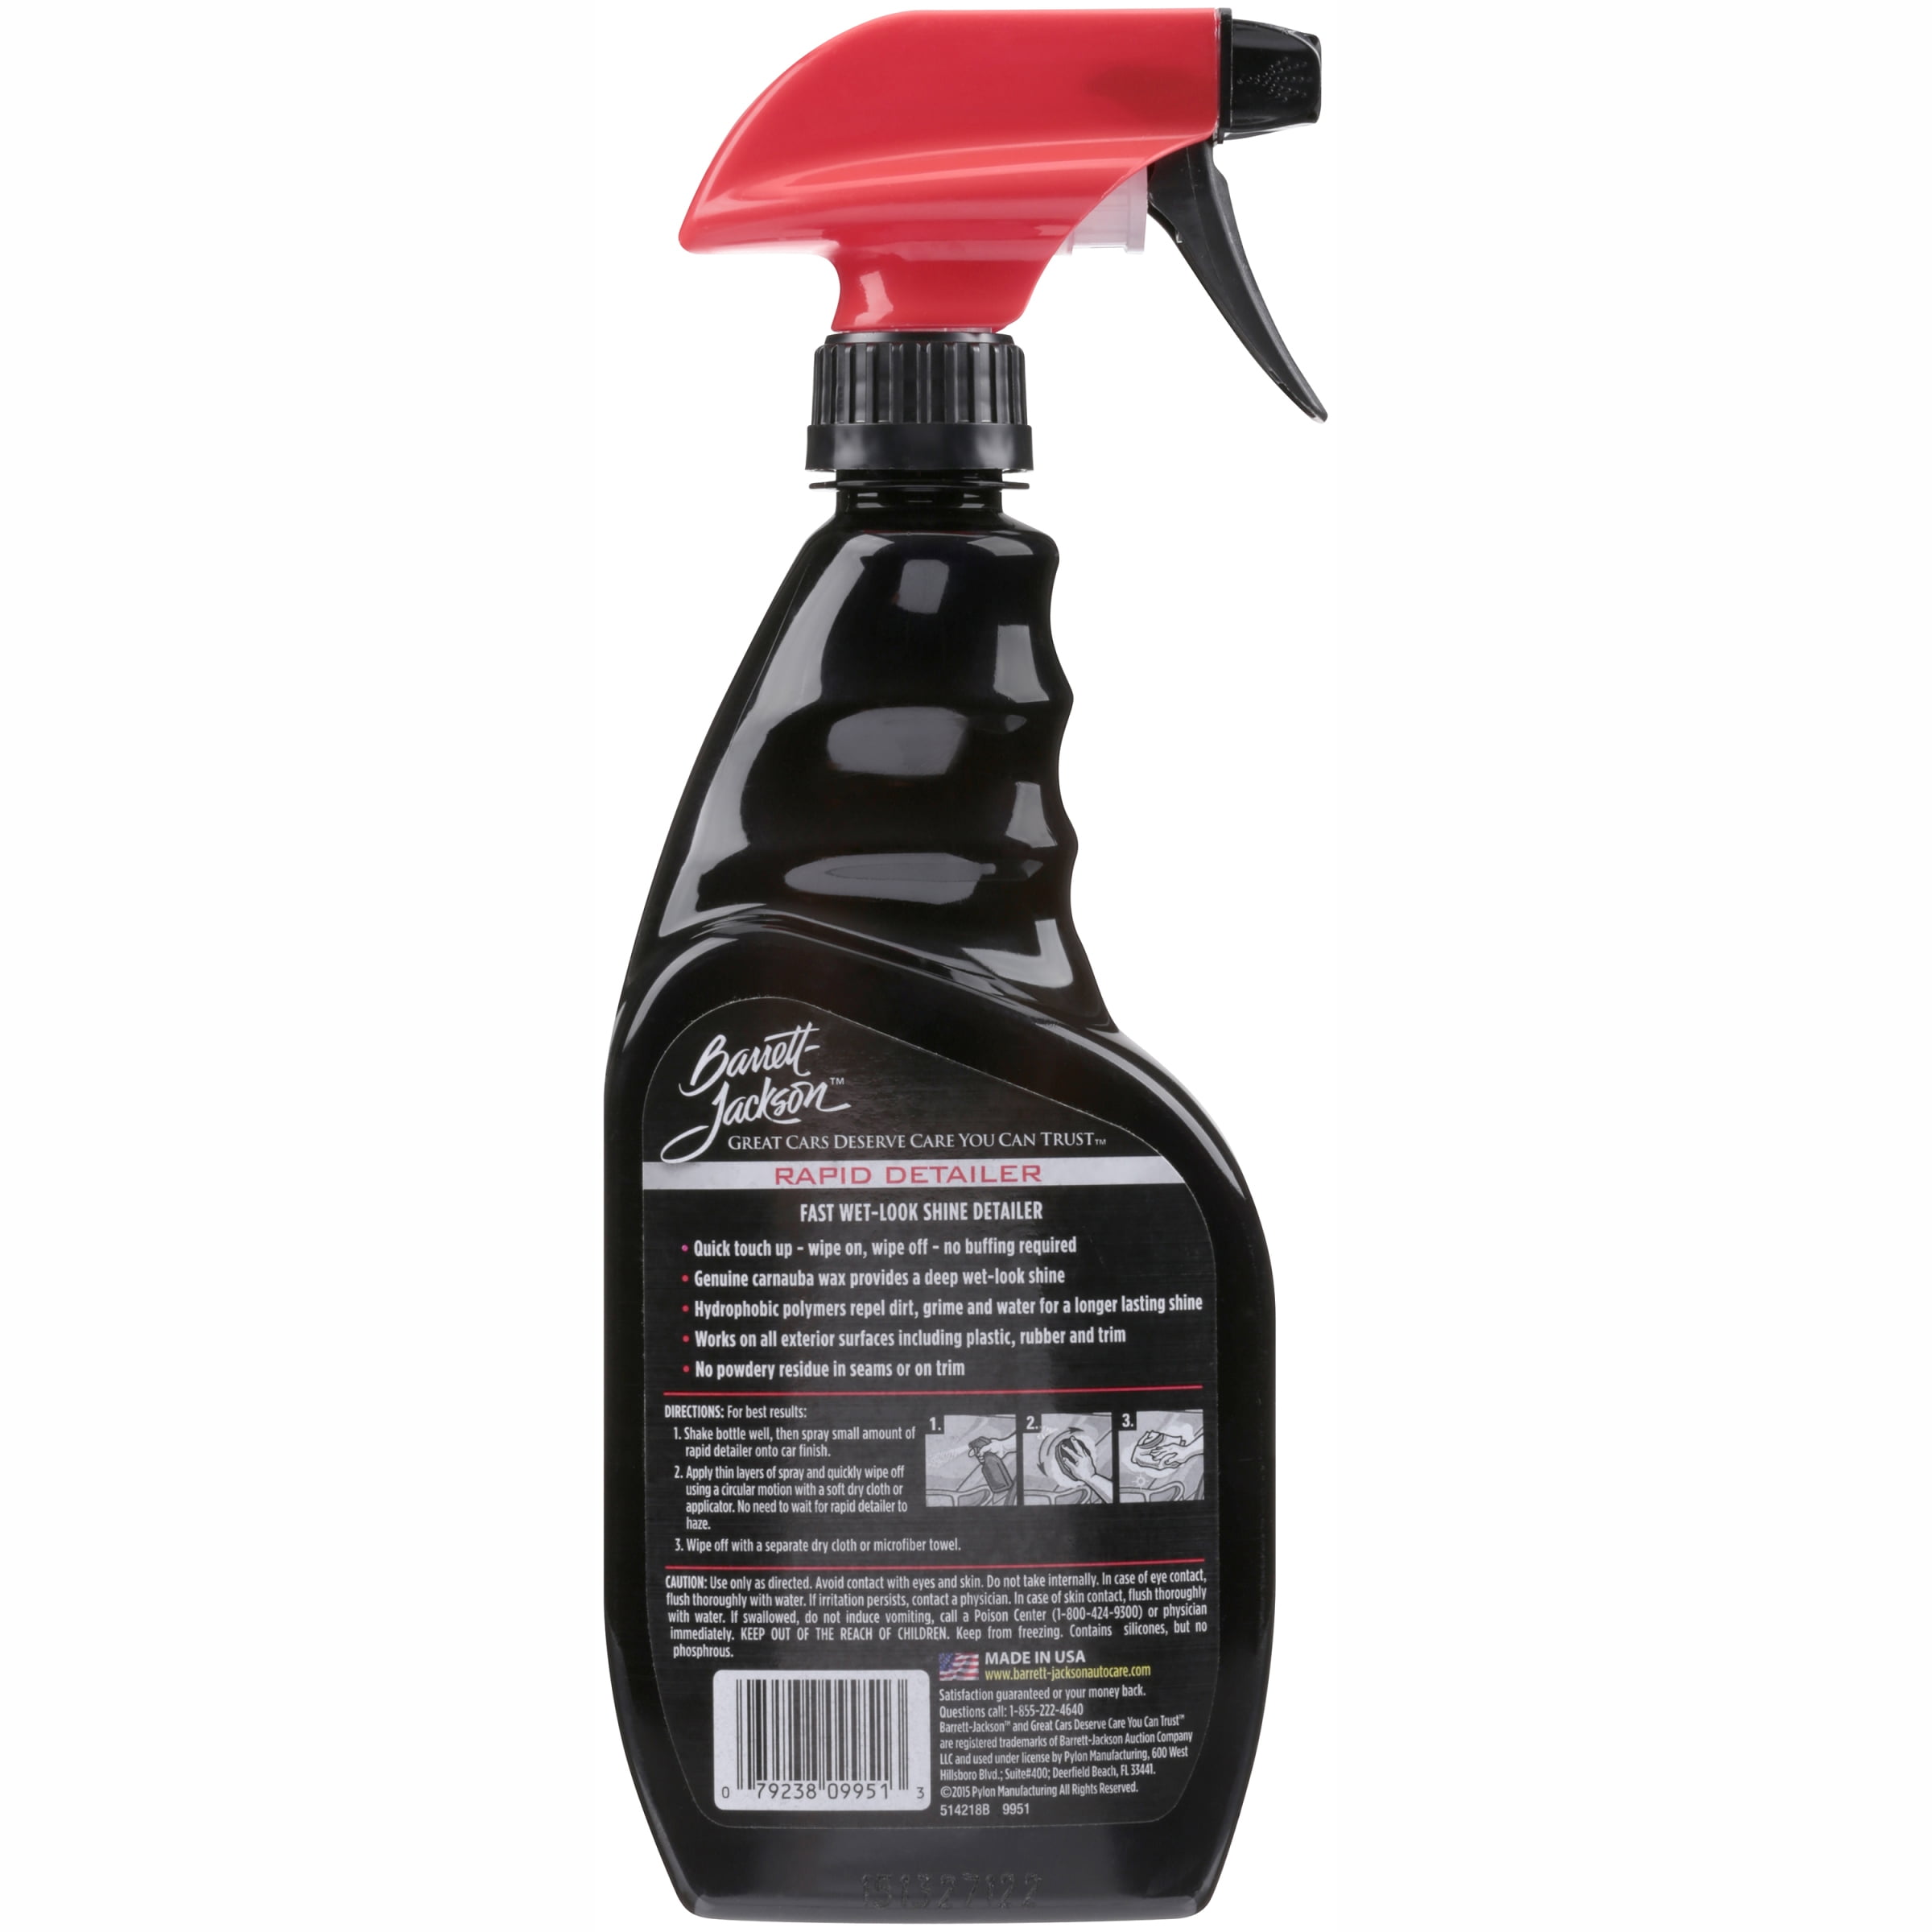 Barrett-Jackson Rapid Car Detailing Spray, Contains Carnauba Wax - Spray on  and Wipe Off for Easy